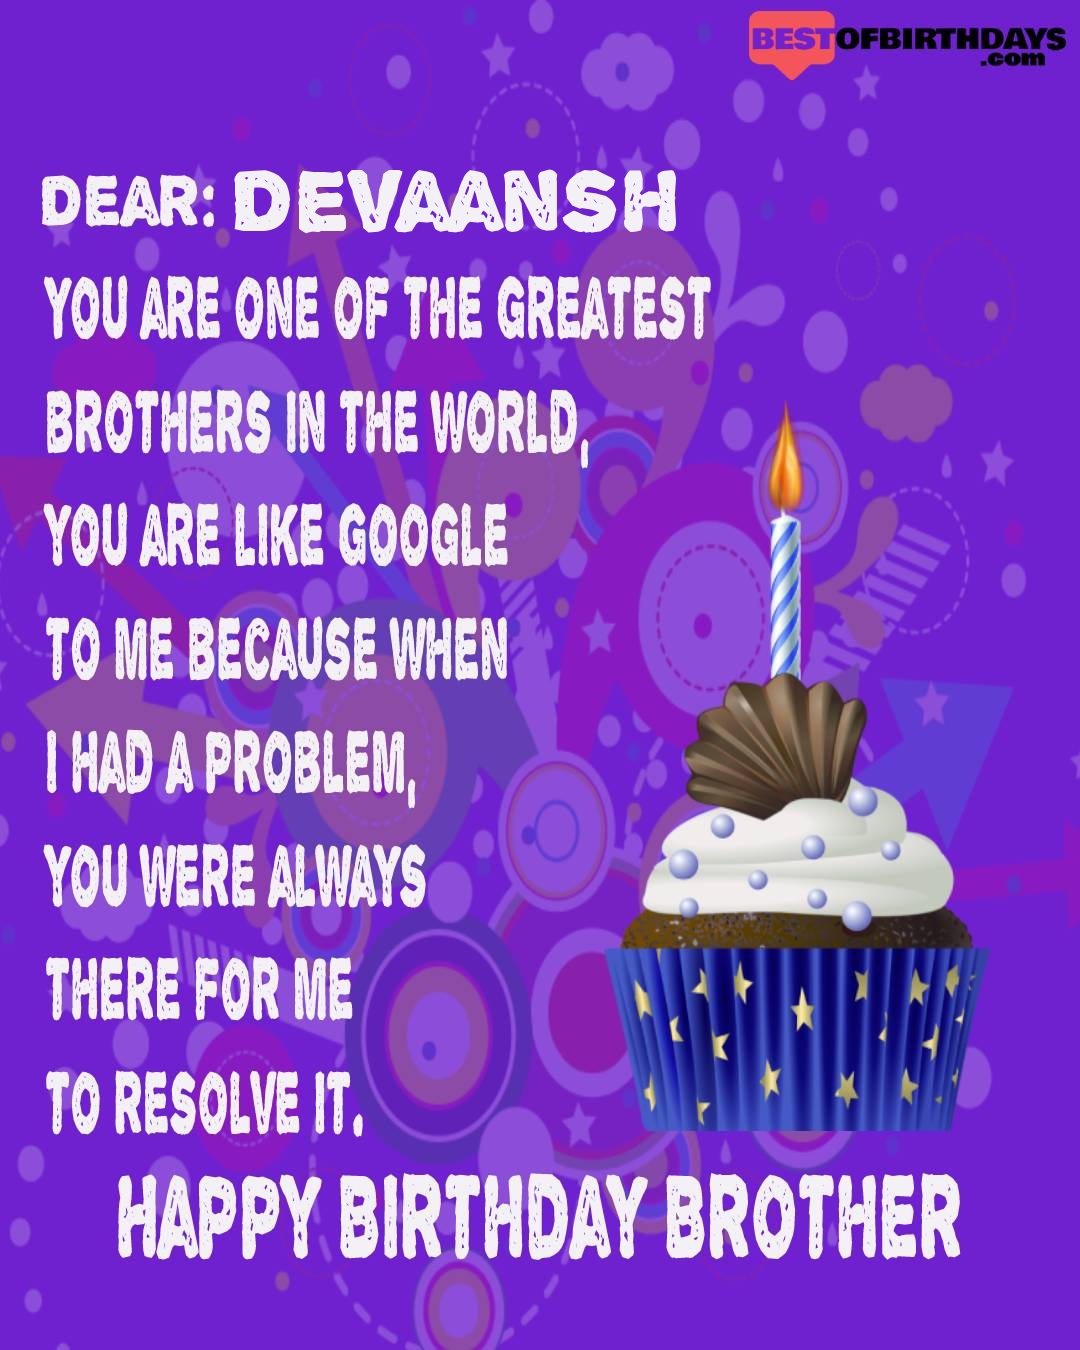 Happy birthday devaansh bhai brother bro